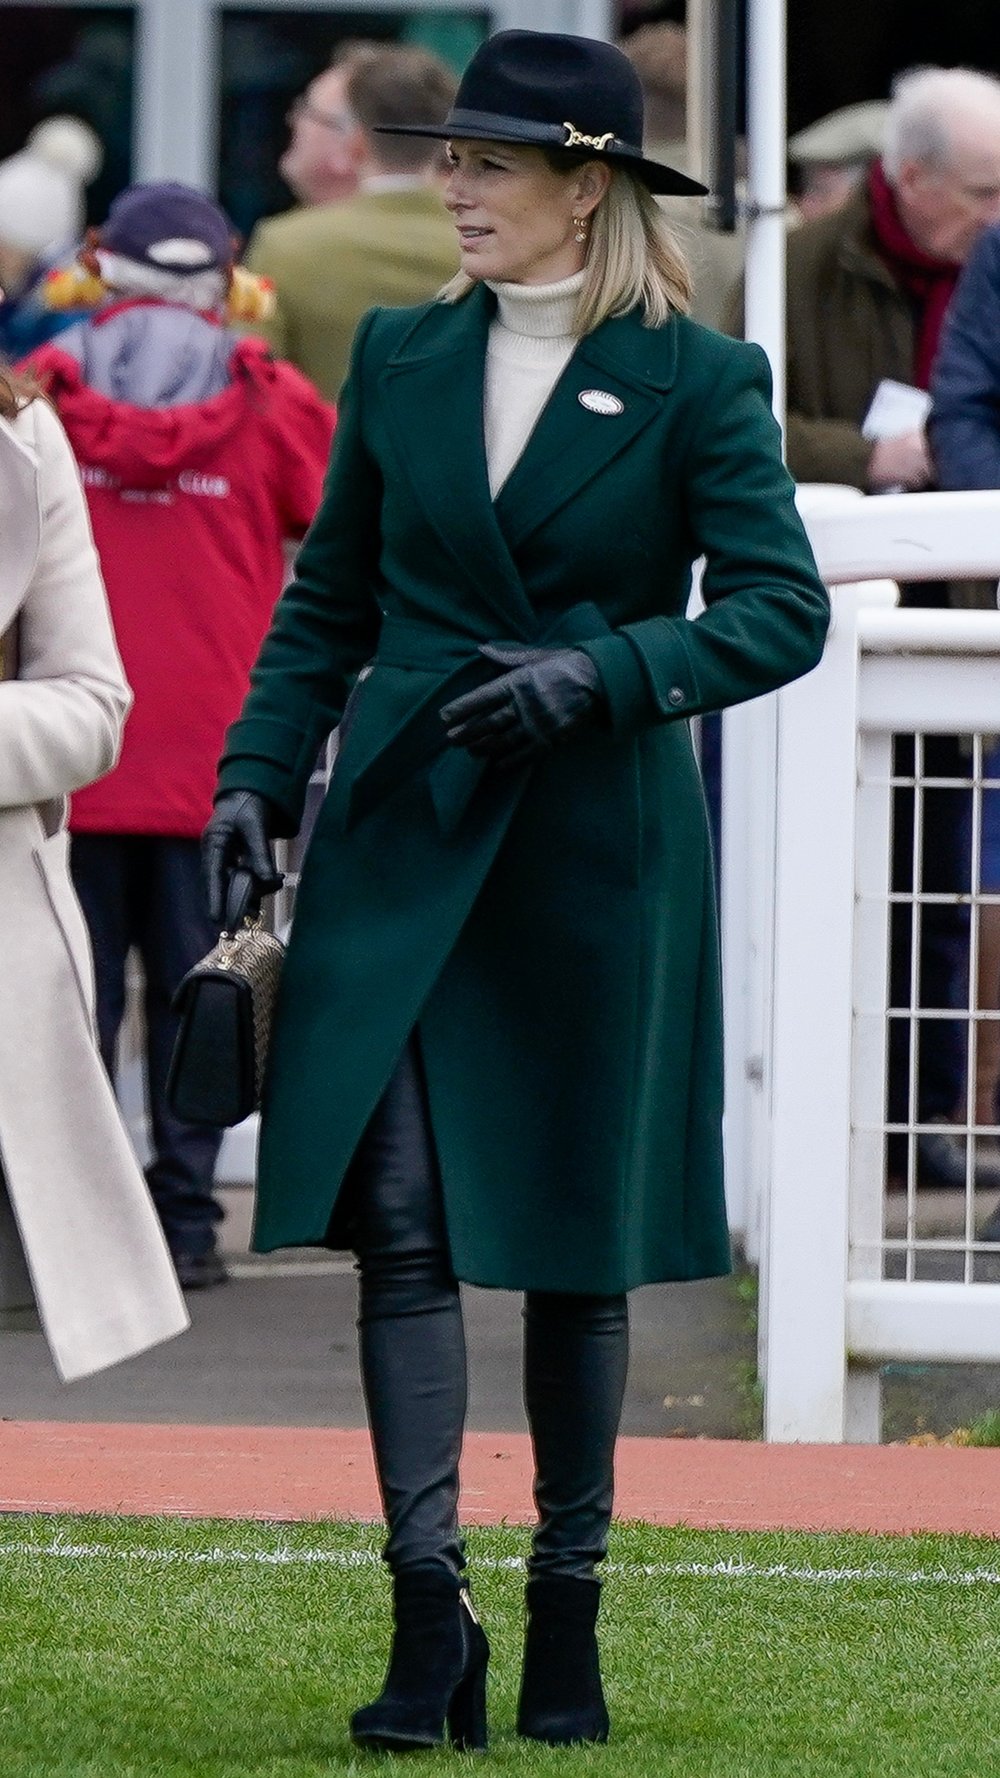 Zara Tindall Attends Cheltenham Christmas Meeting Day 2 — Royal ...